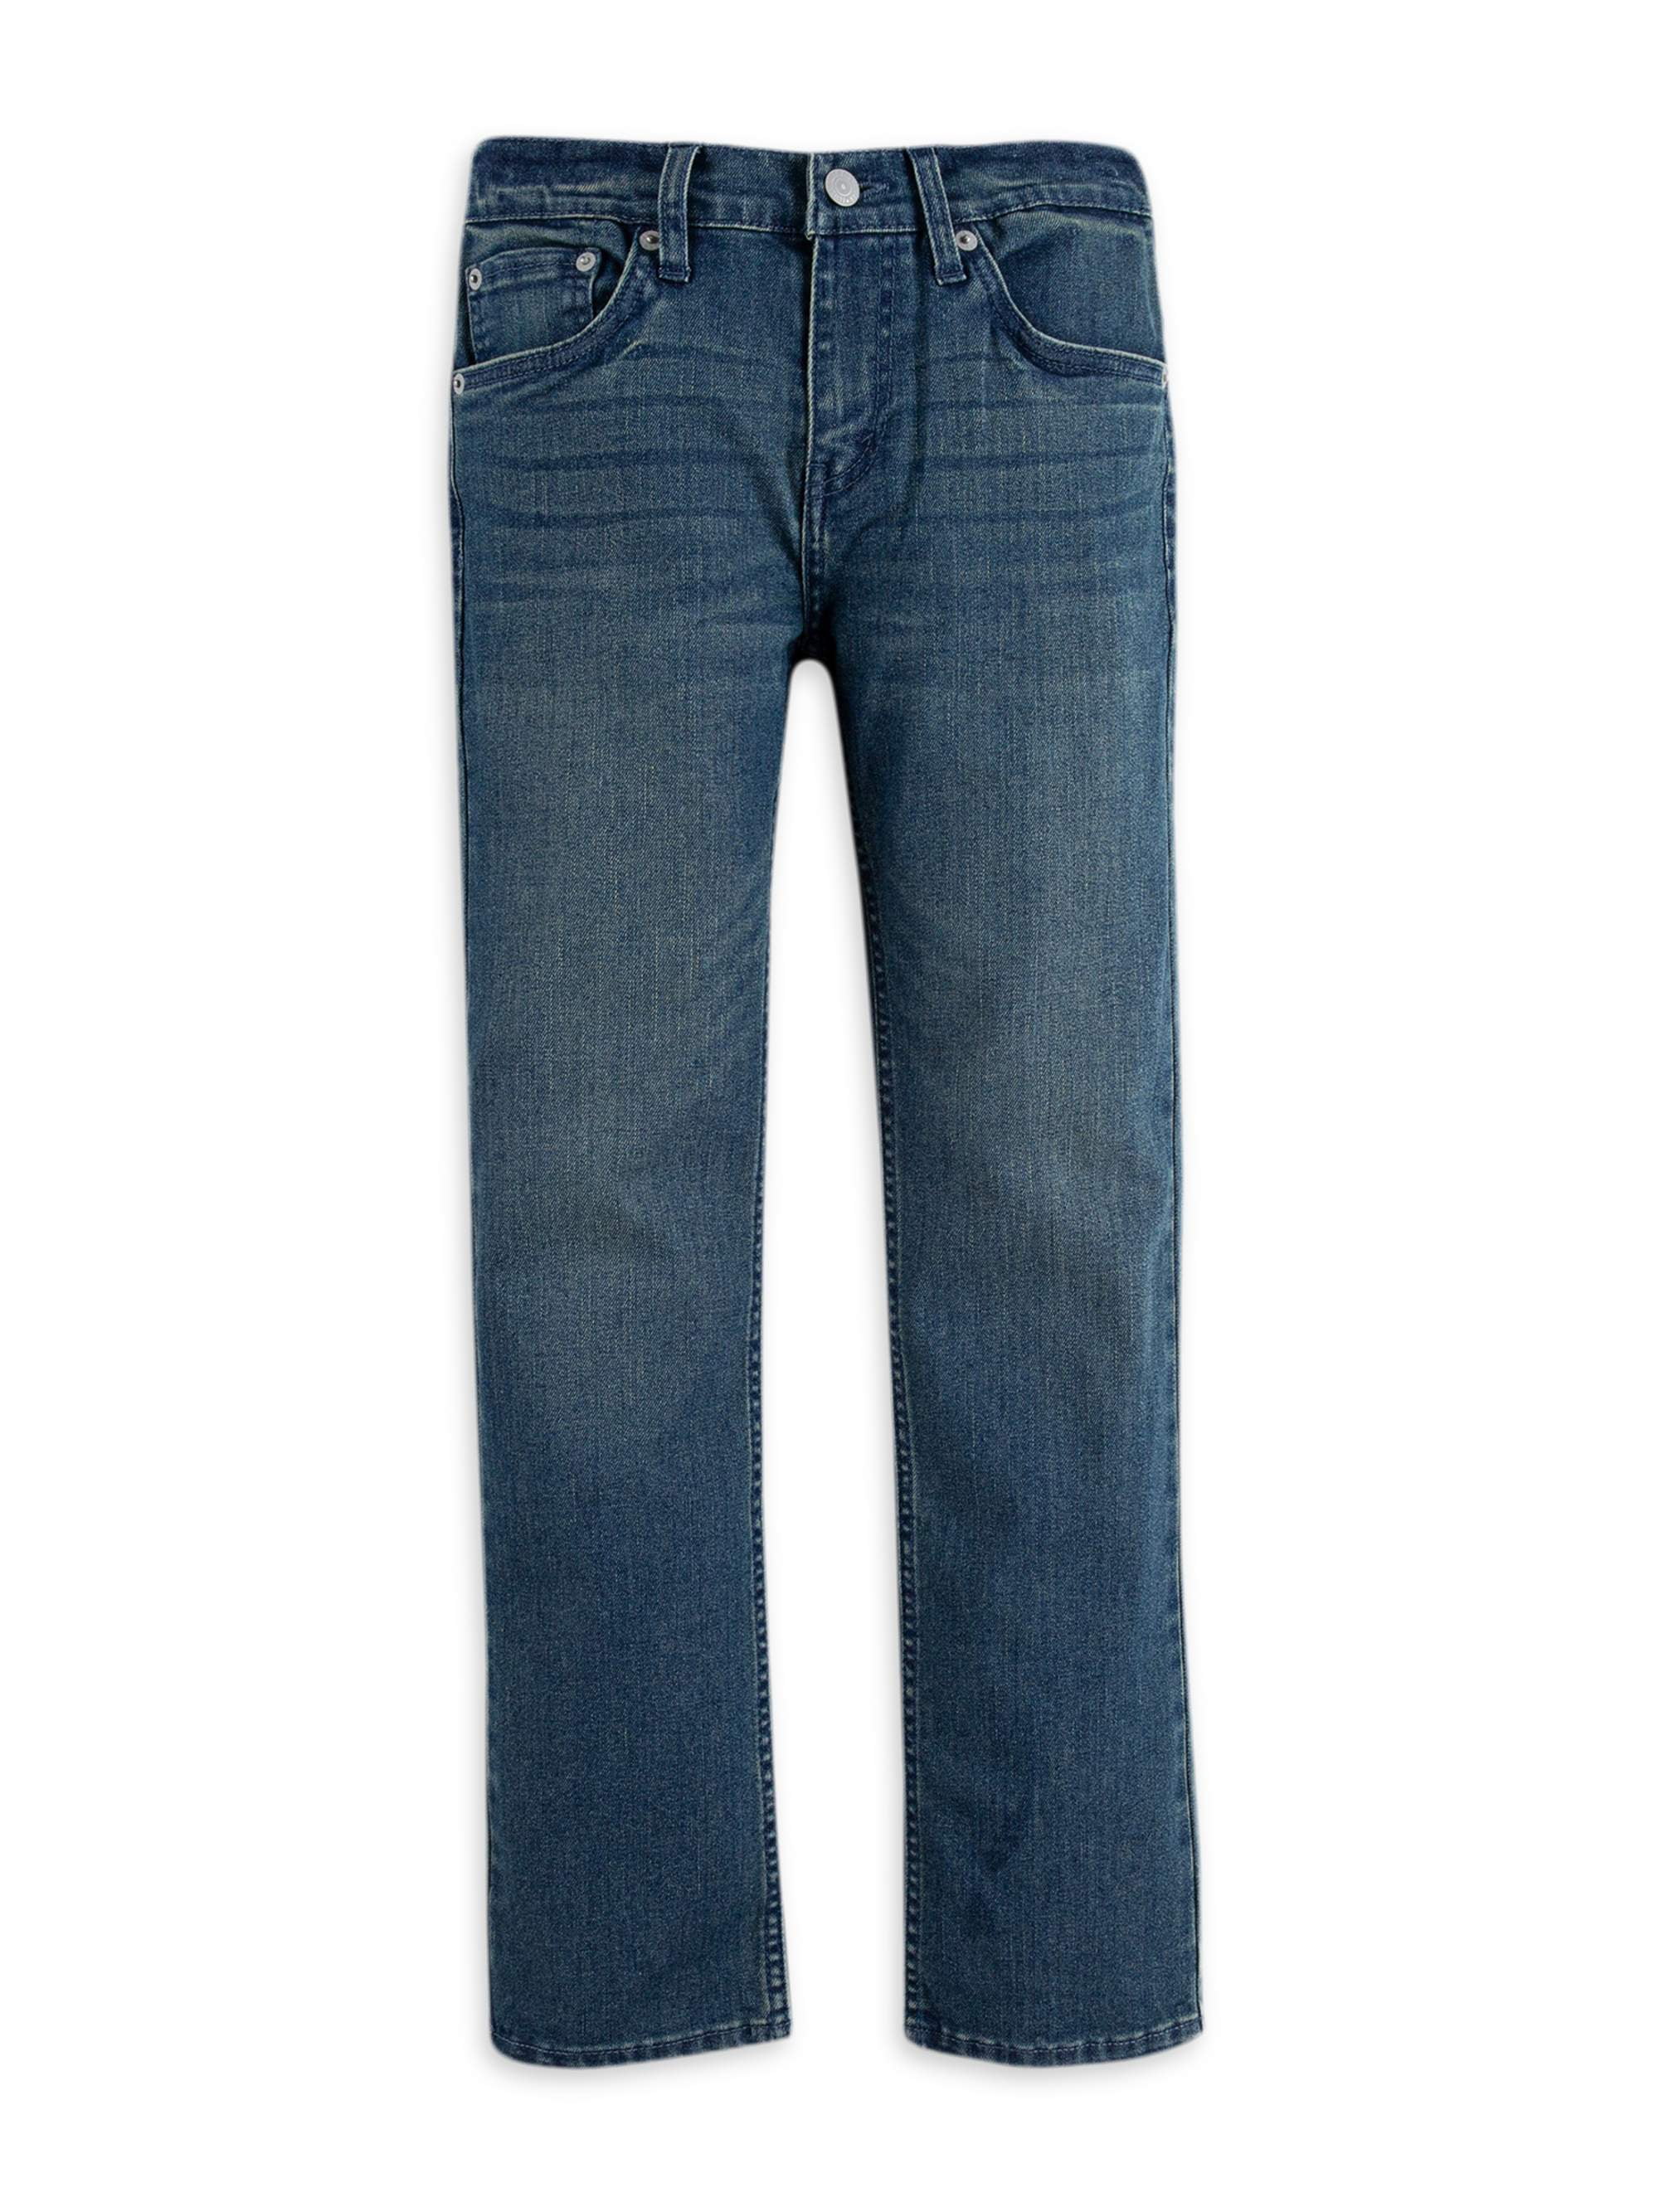 Levi's 514 Straight Jeans, Sizes 4-20 - Walmart.com